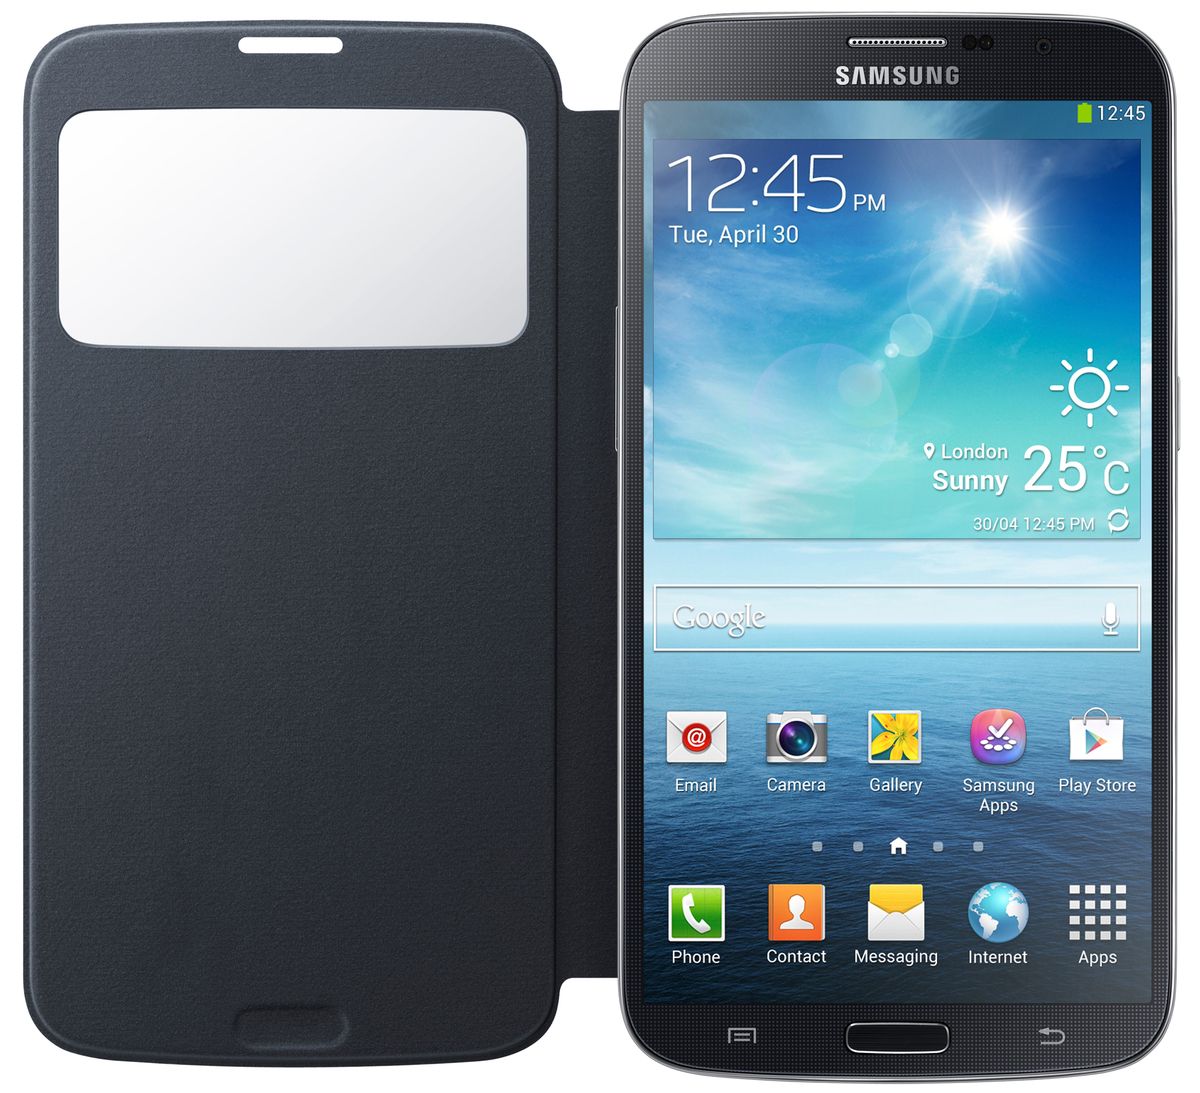 Samsung Galaxy Mega Характеристики